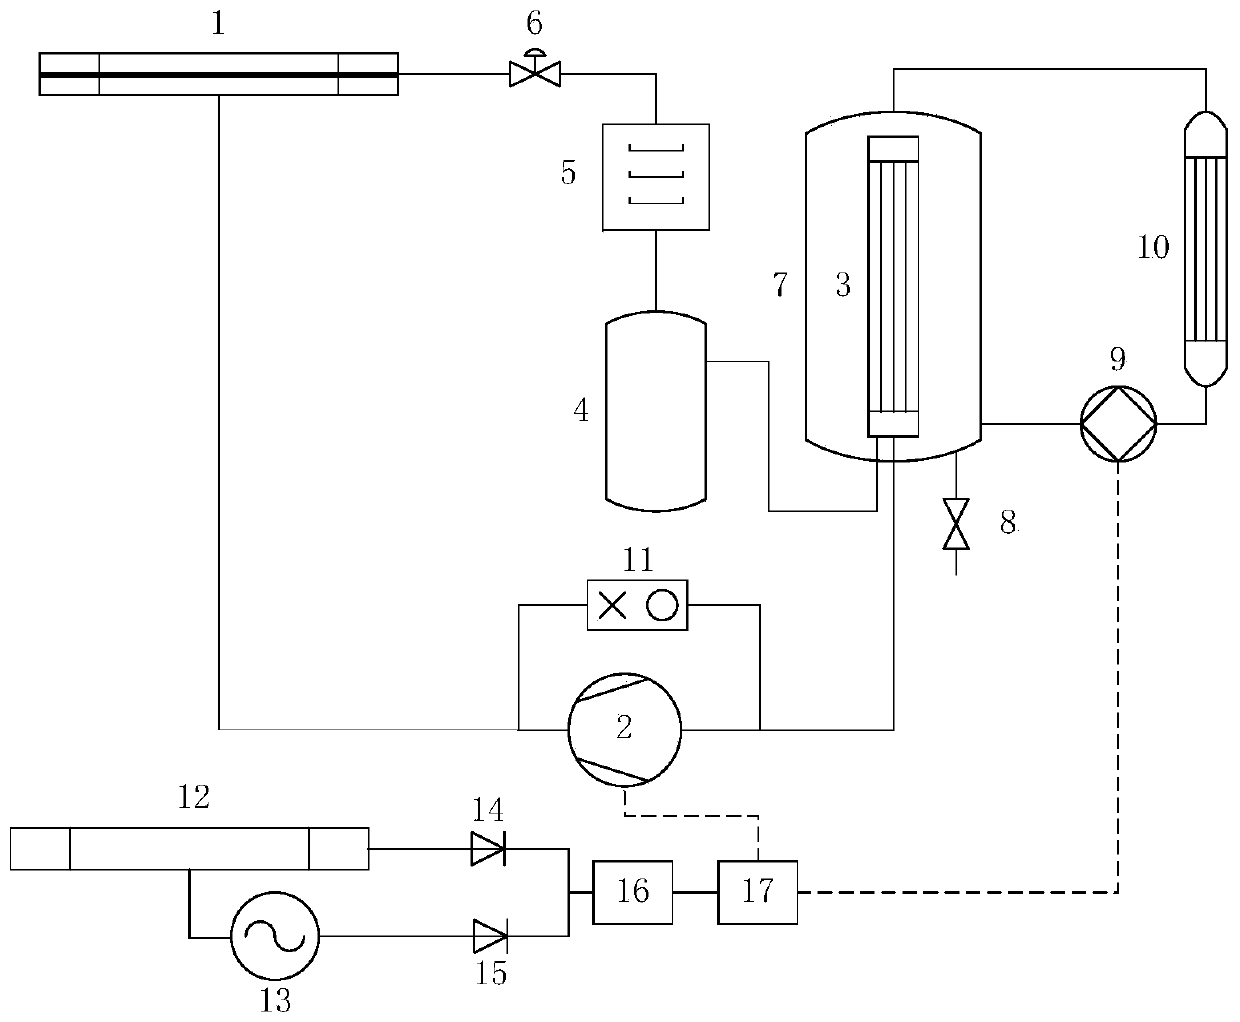 Control method of heat pump system